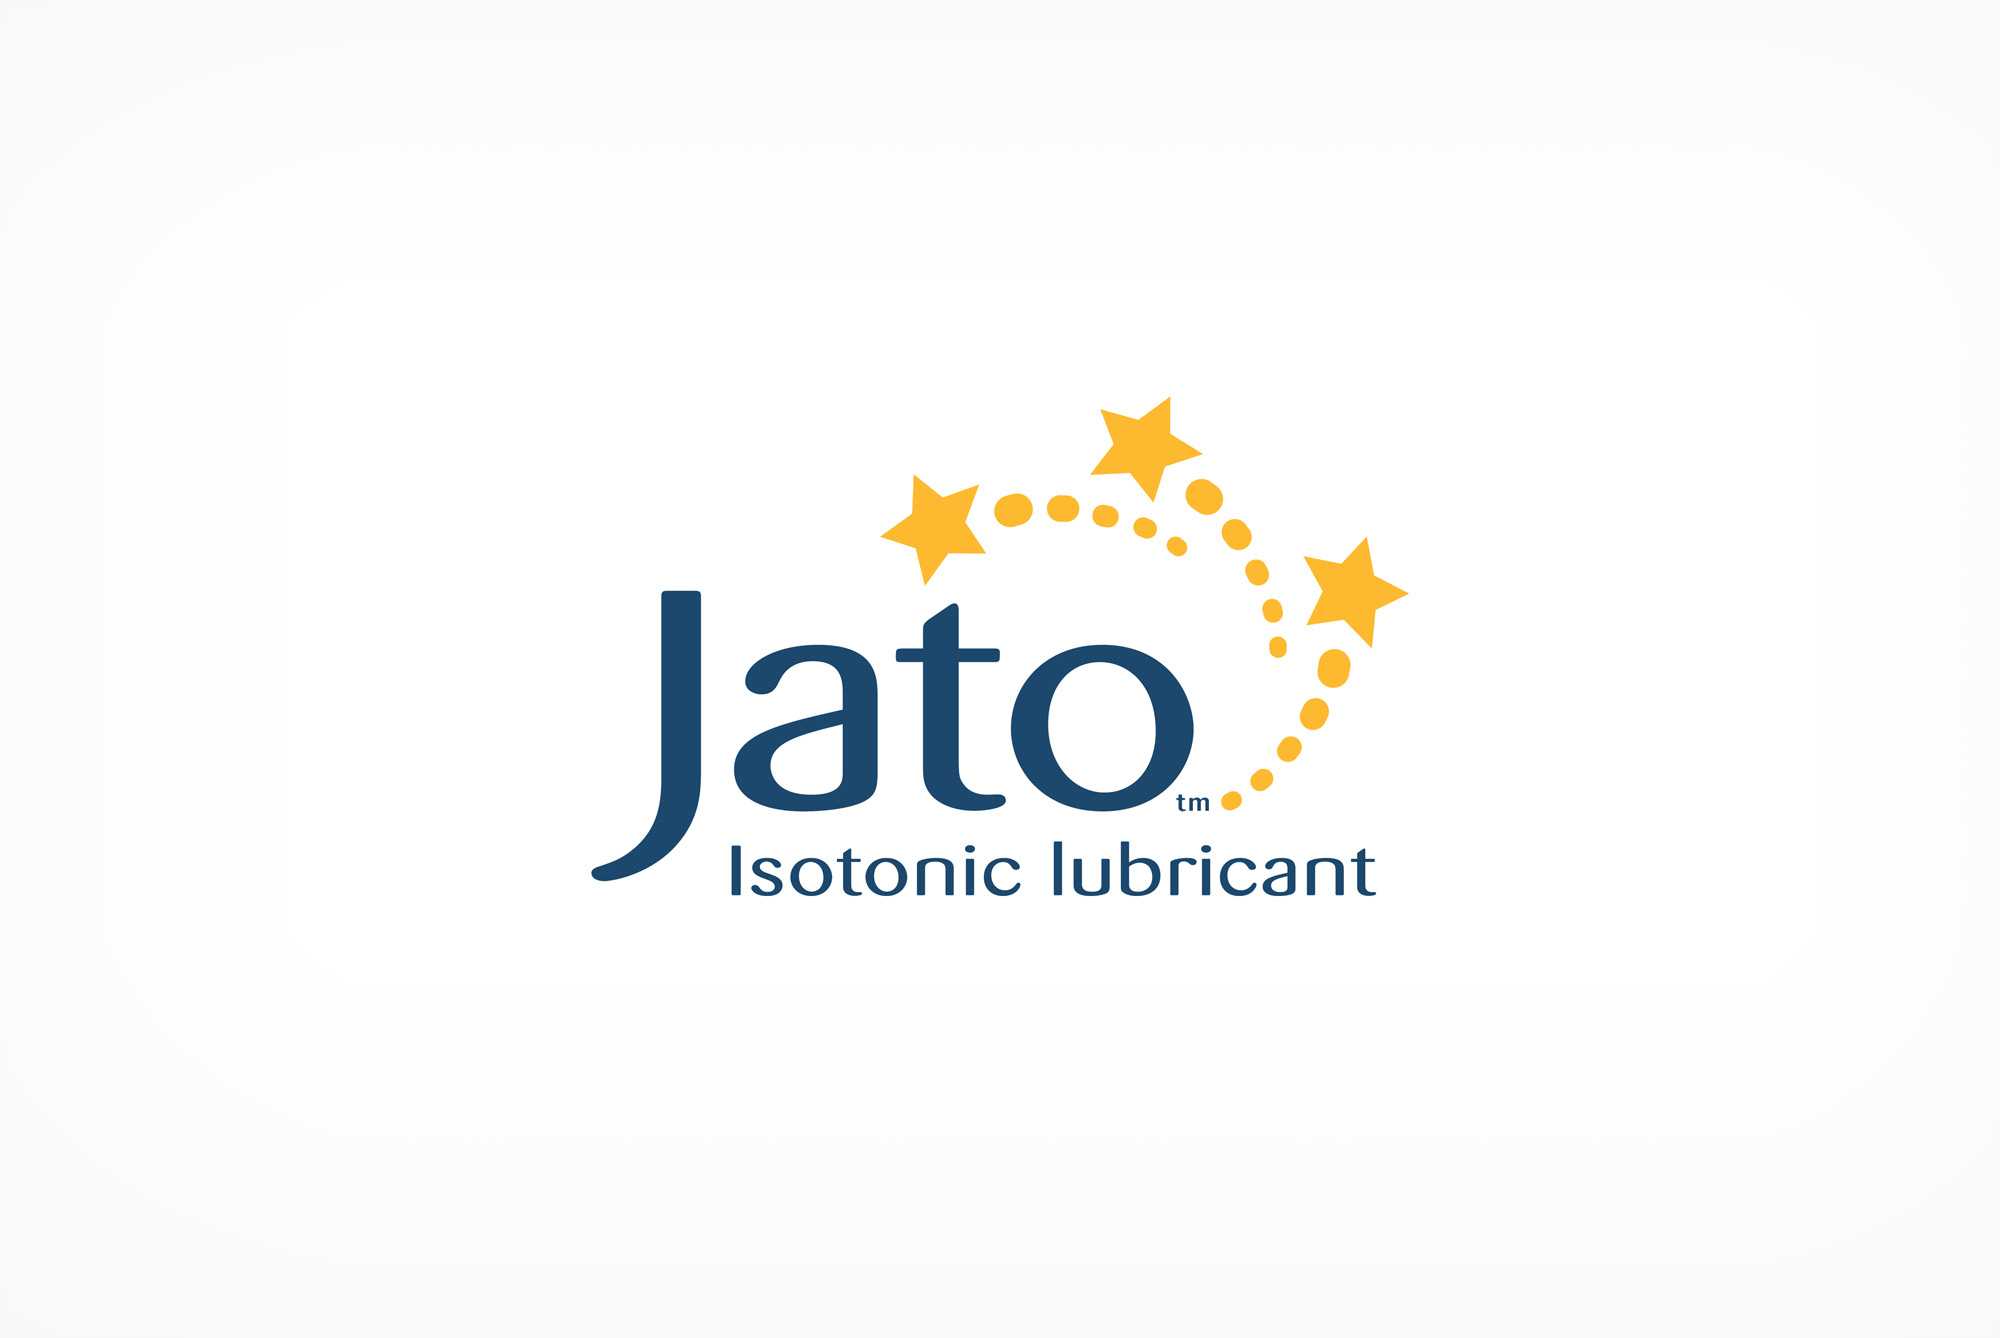 INGfertility's Jet Assisted Take Off - Jato brand logo